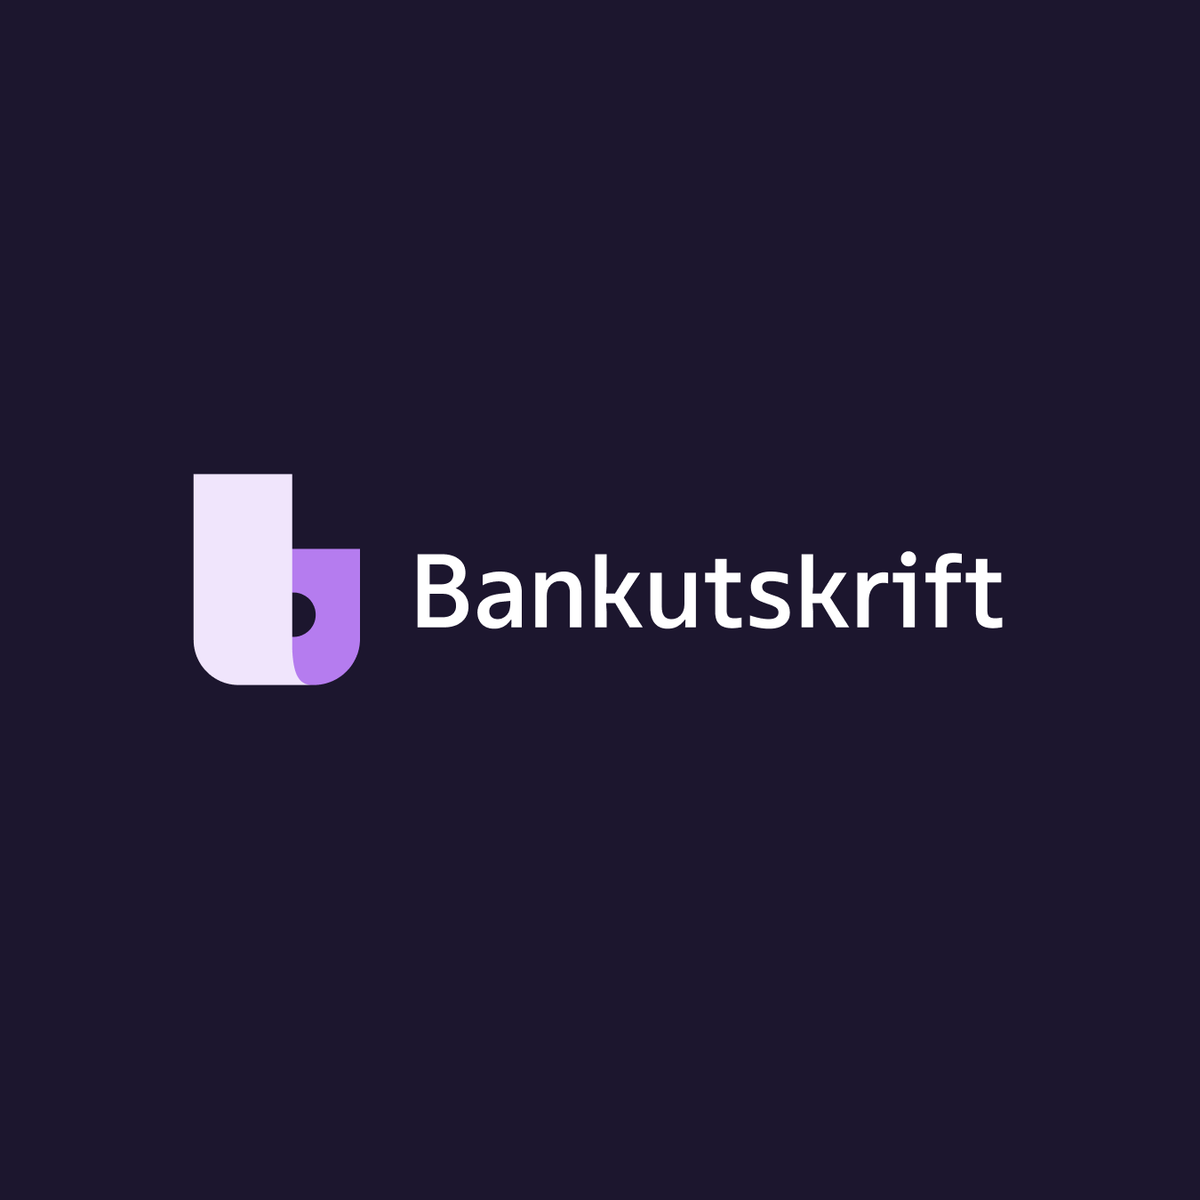 Bankutskrifts logo